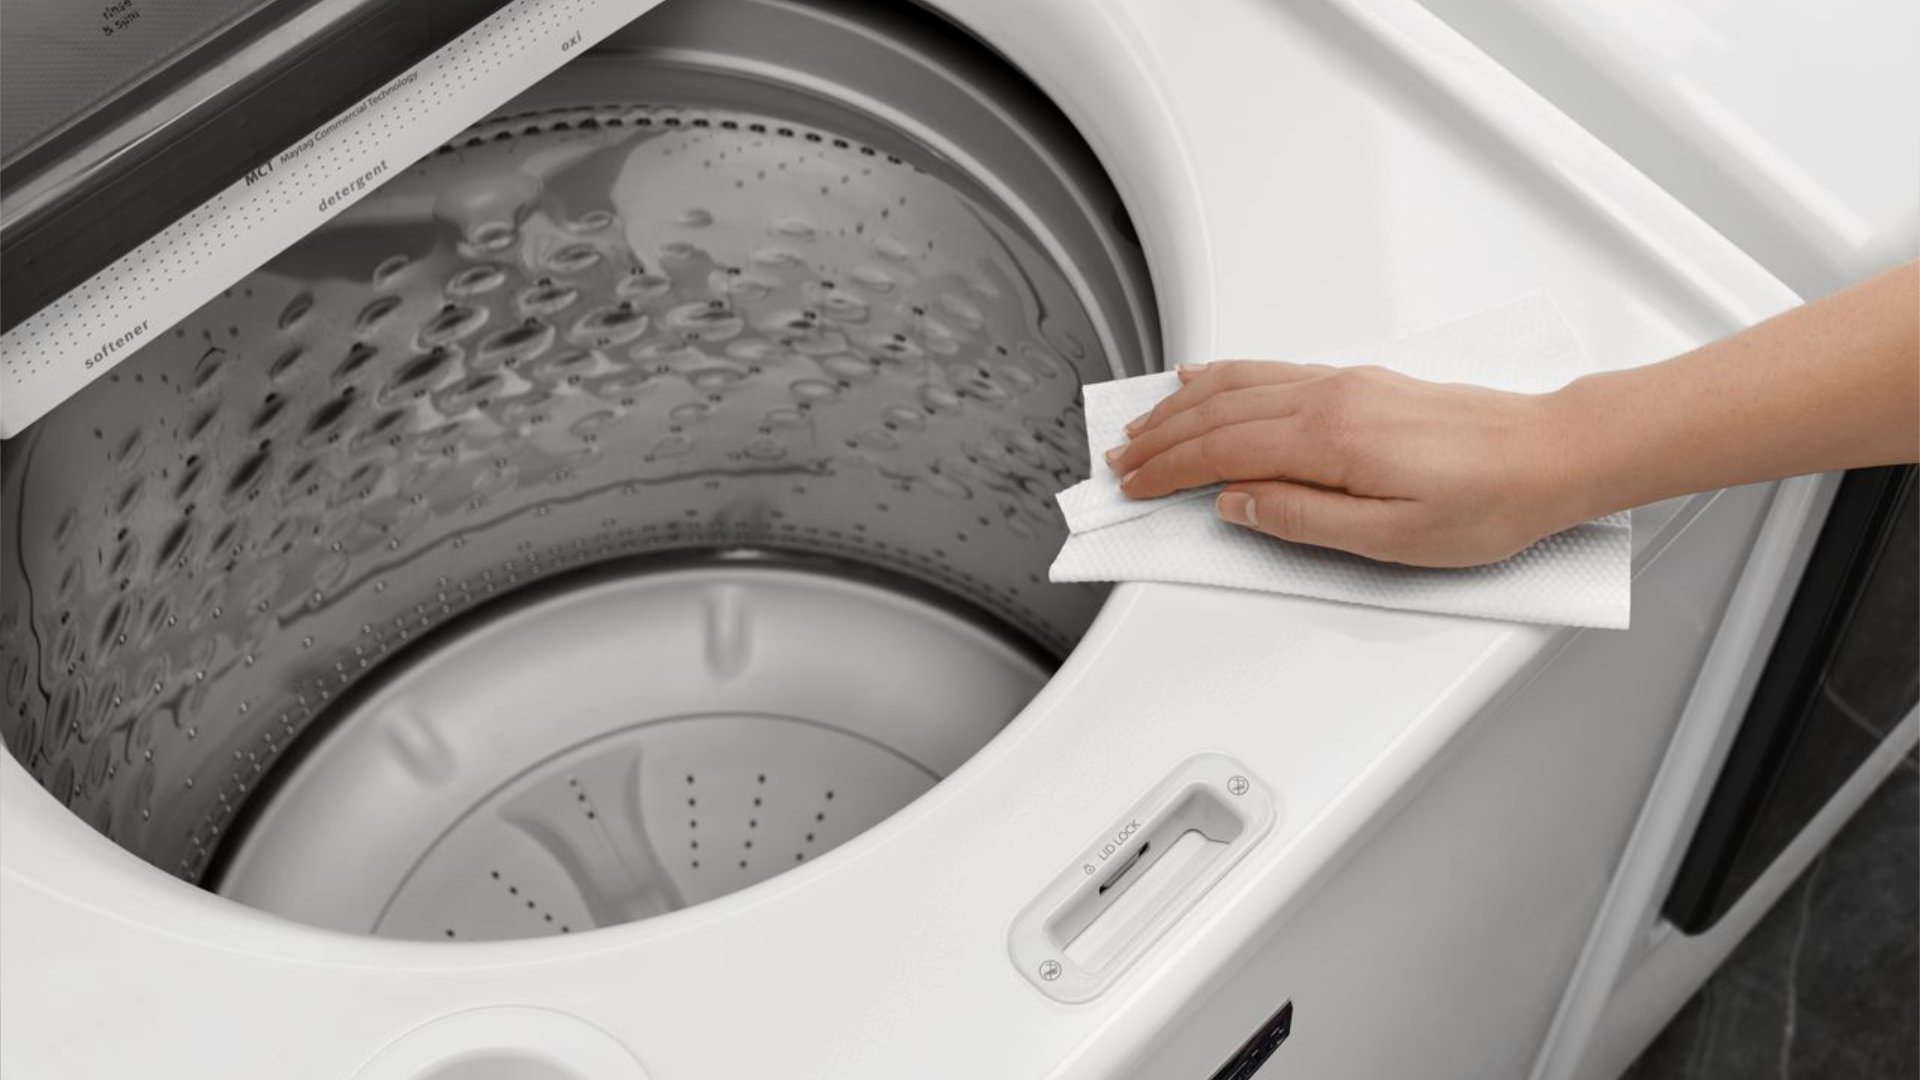 How to Clean a Whirlpool Washing Machine - Dan Marc Appliance